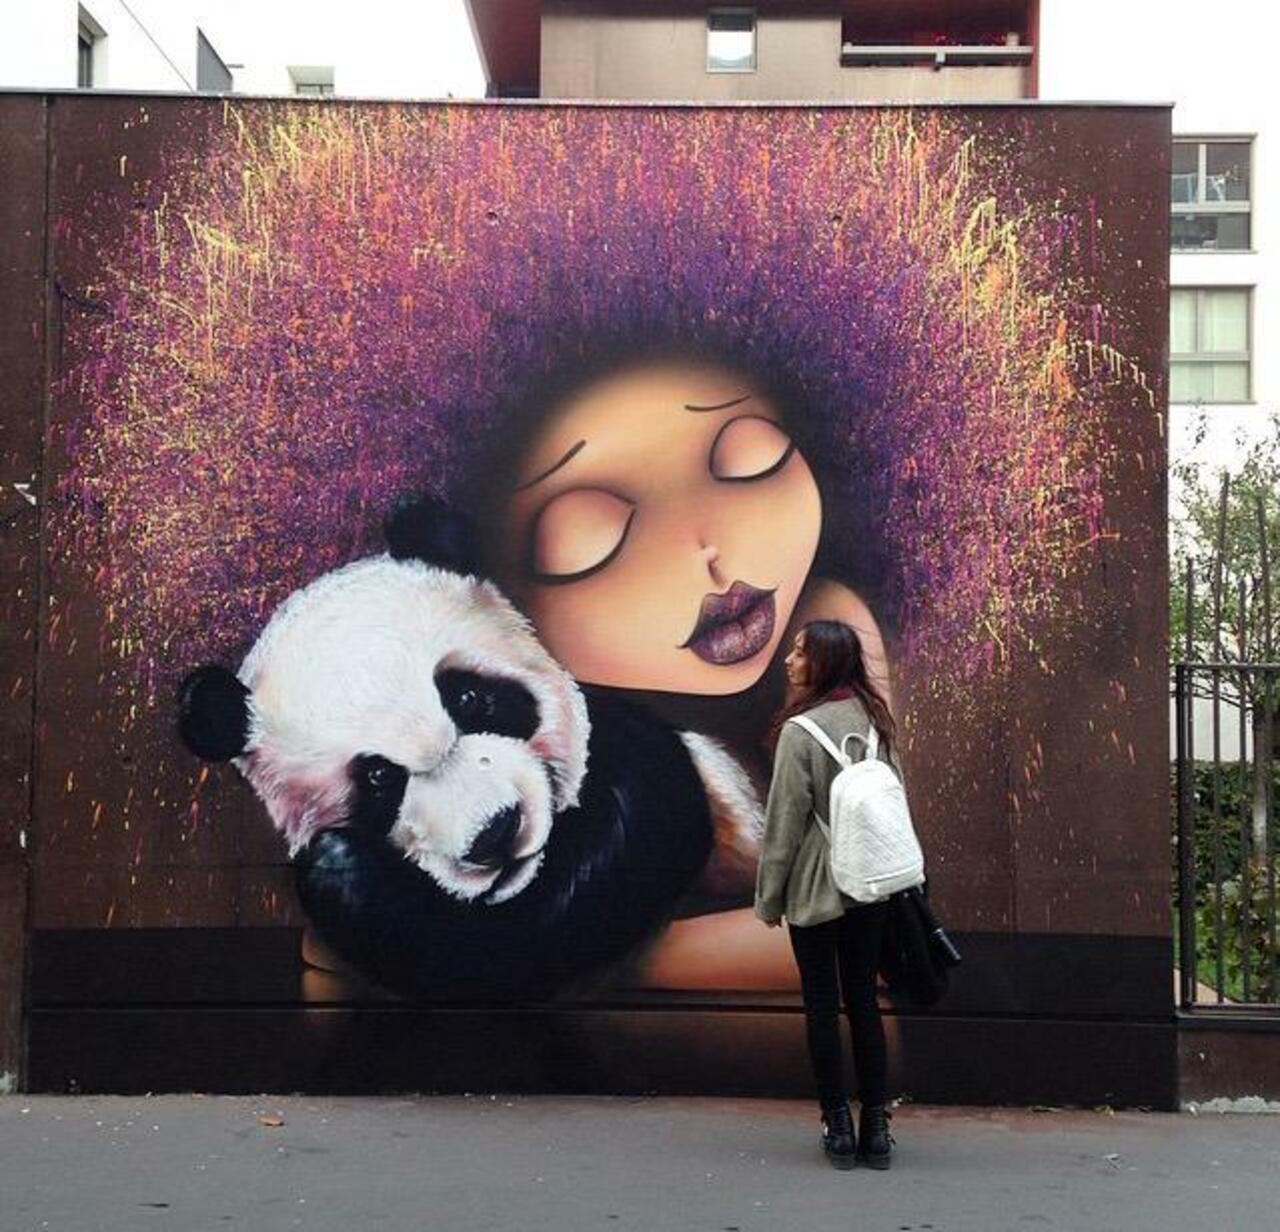 Street Art by VinieGraffiti in Paris 

#art #graffiti #mural #streetart http://t.co/NCpbGGnw3s